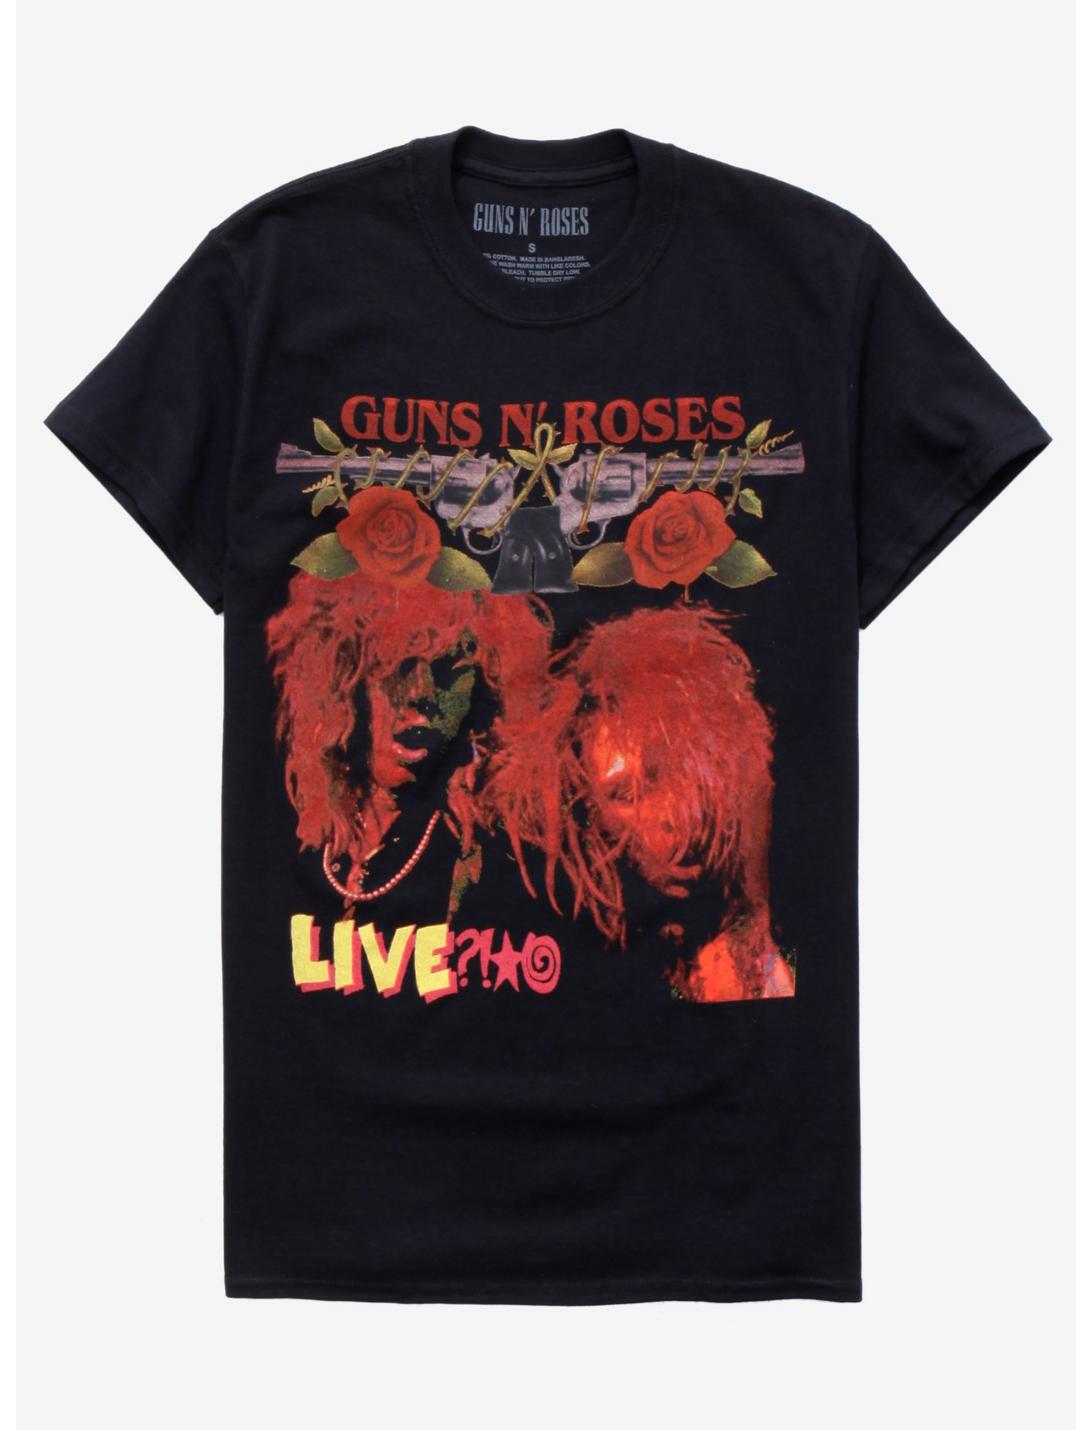 Guns N' Roses Live?! Like A Suicide Album Cover Girls T-Shirt, BLACK, hi-res